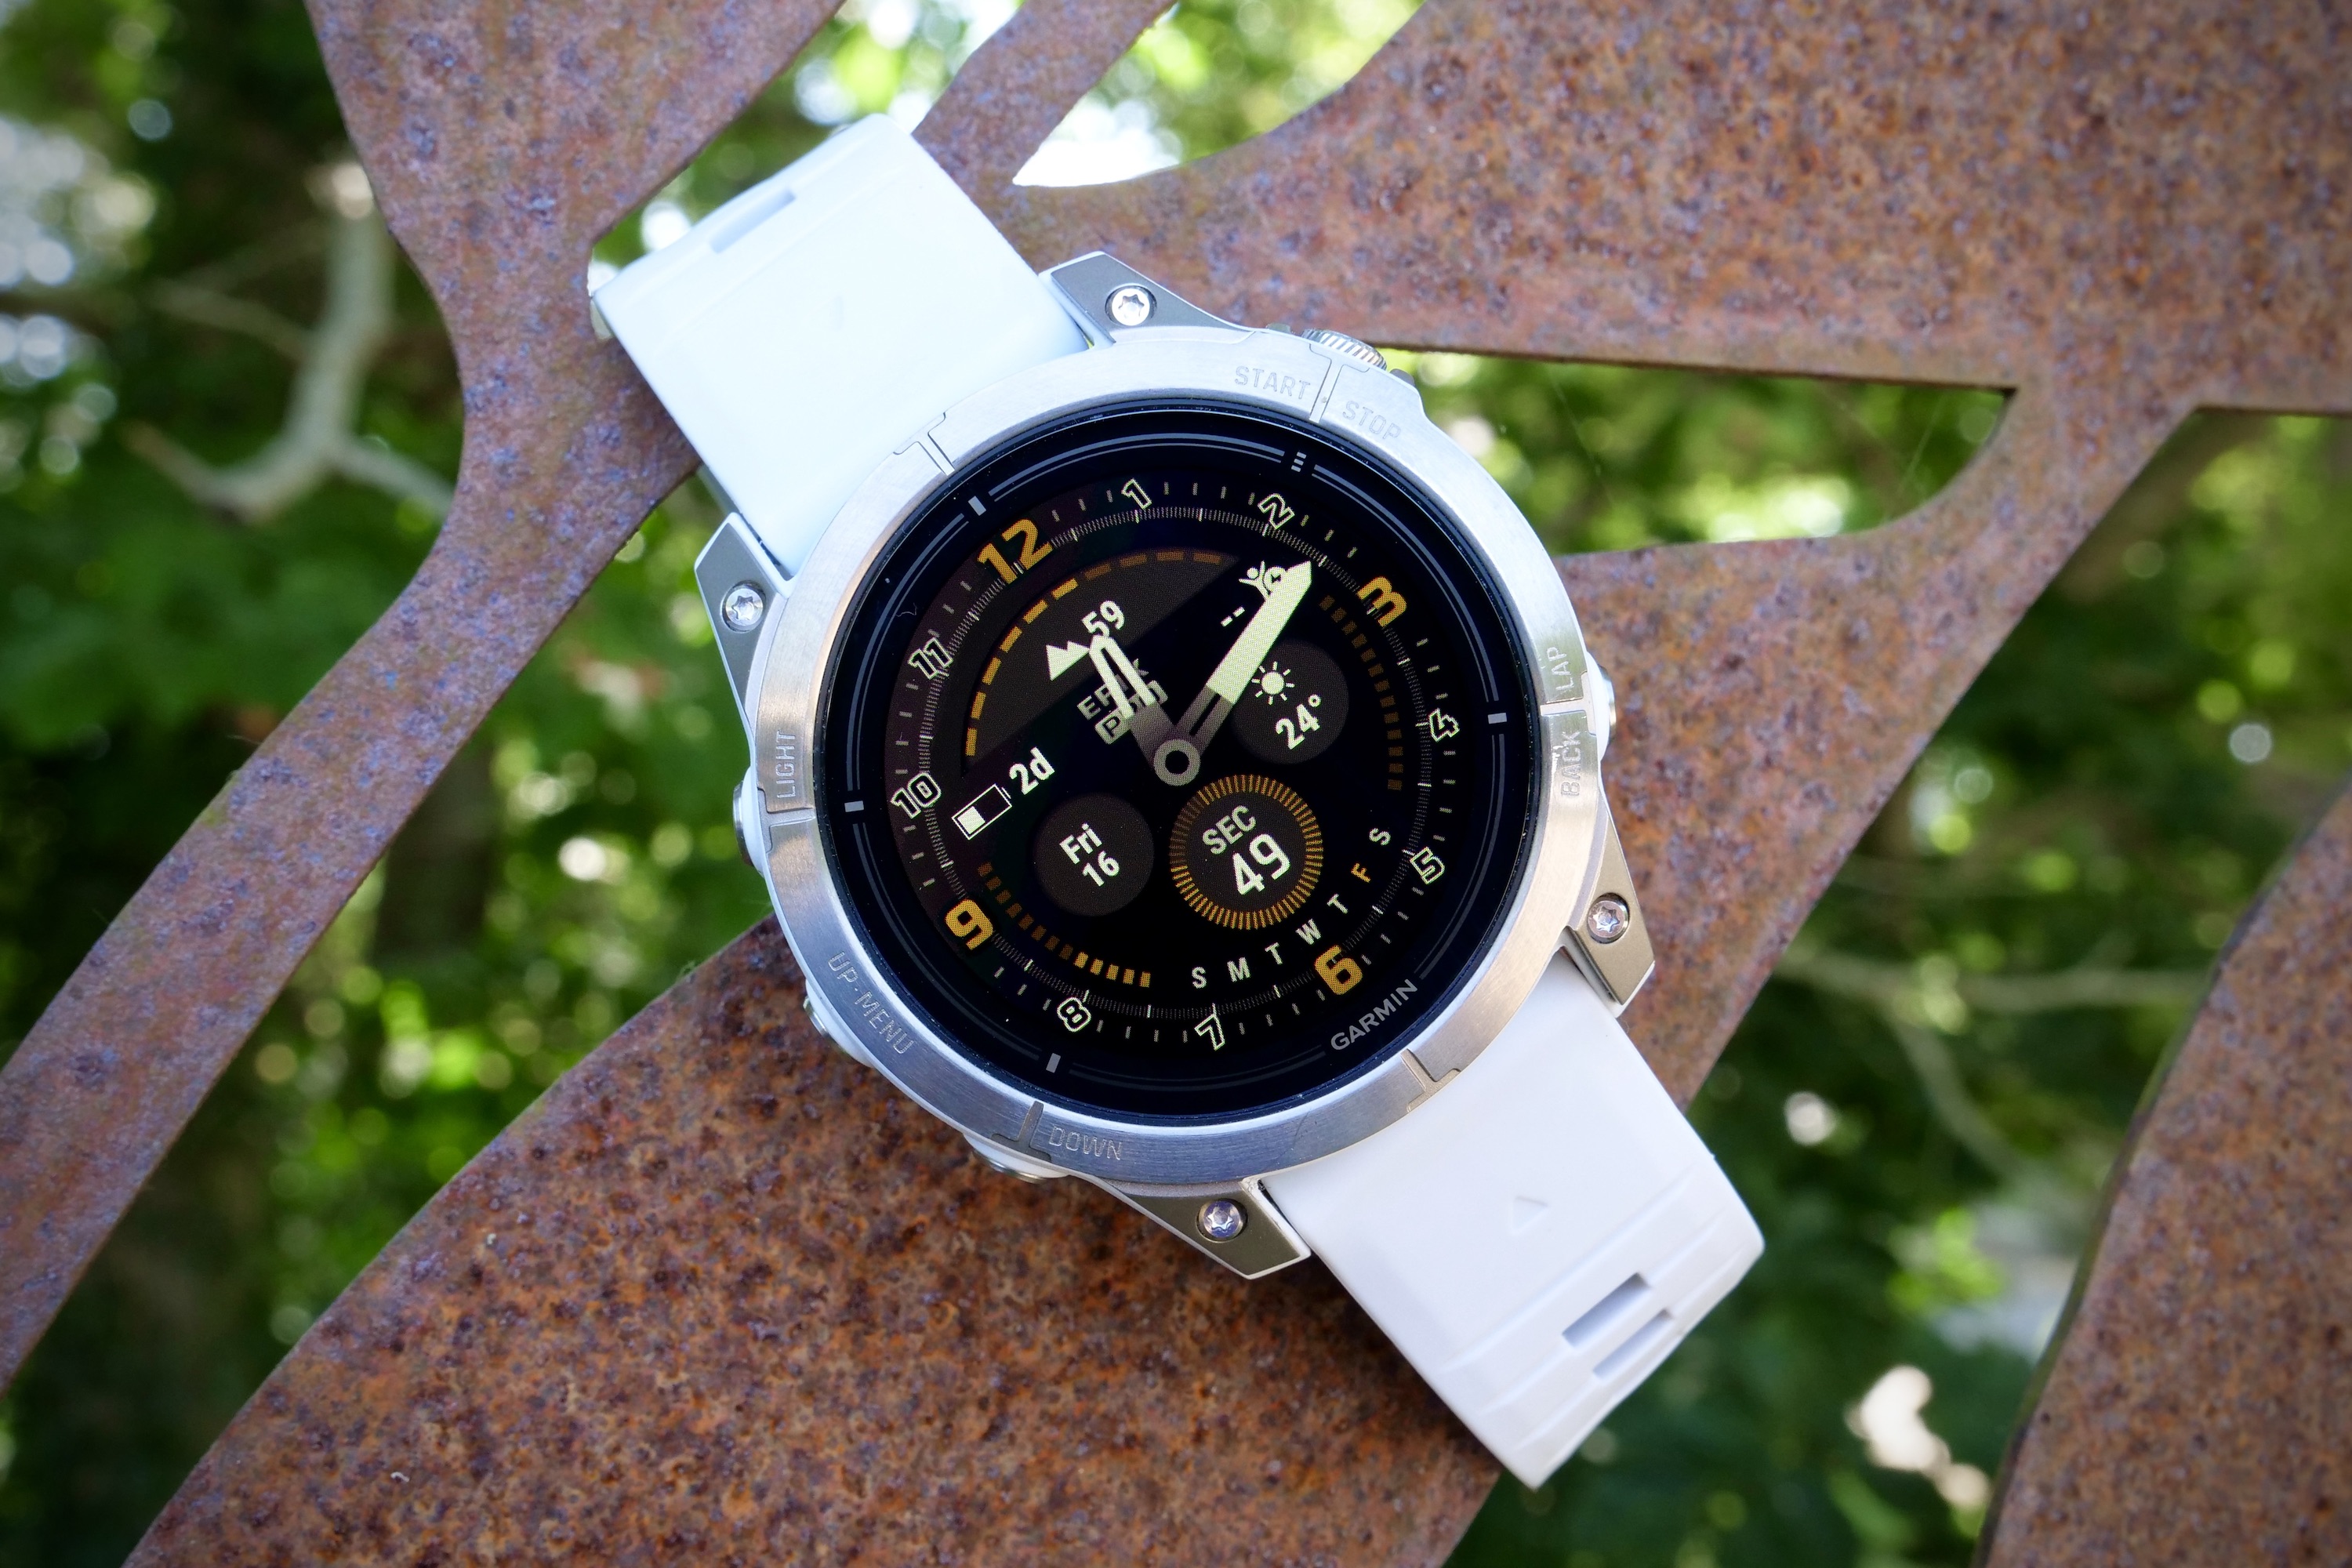 Garmin epix Pro Gen 2 Sapphire Edition 47 mm Smartwatch - Carbon Gray